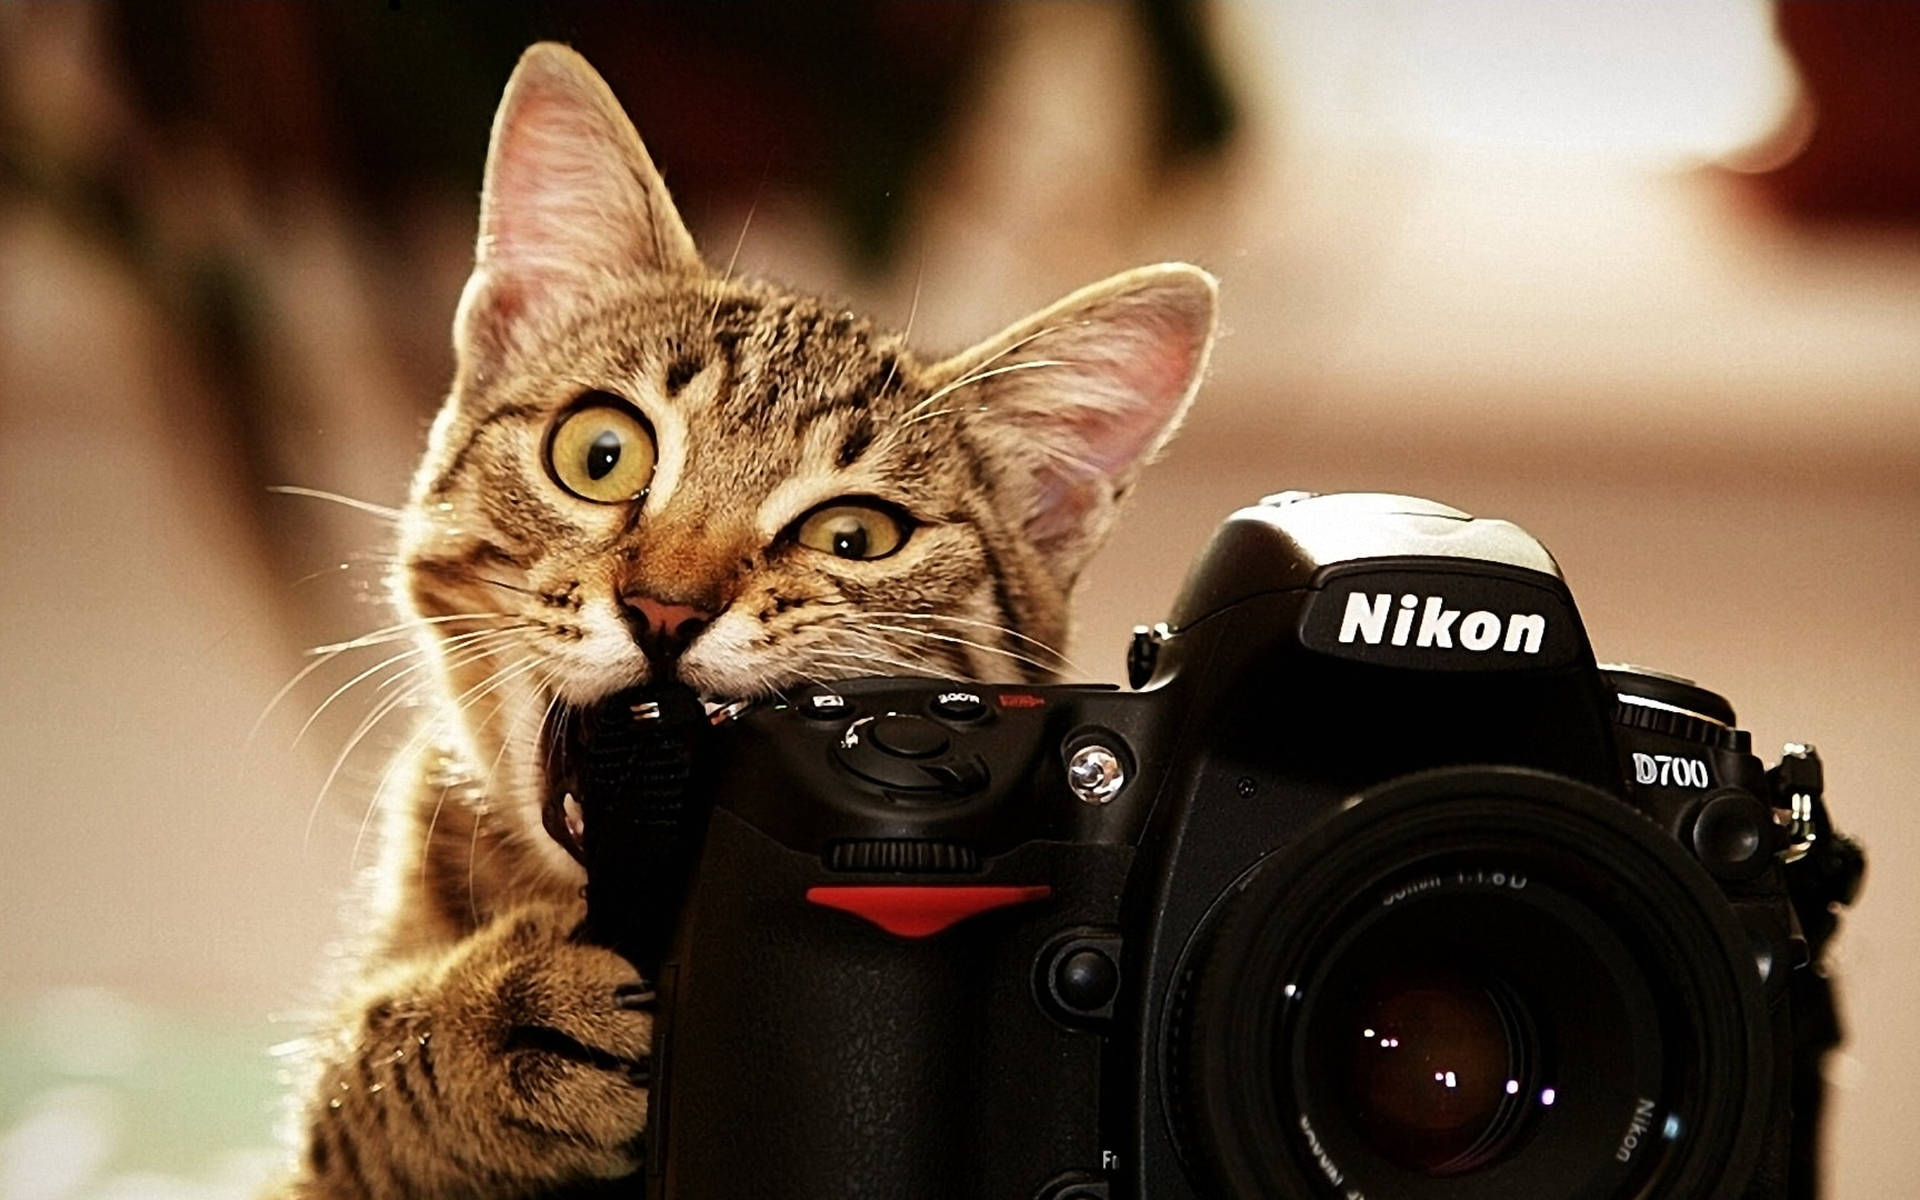 A Dslr Camera And A Cat